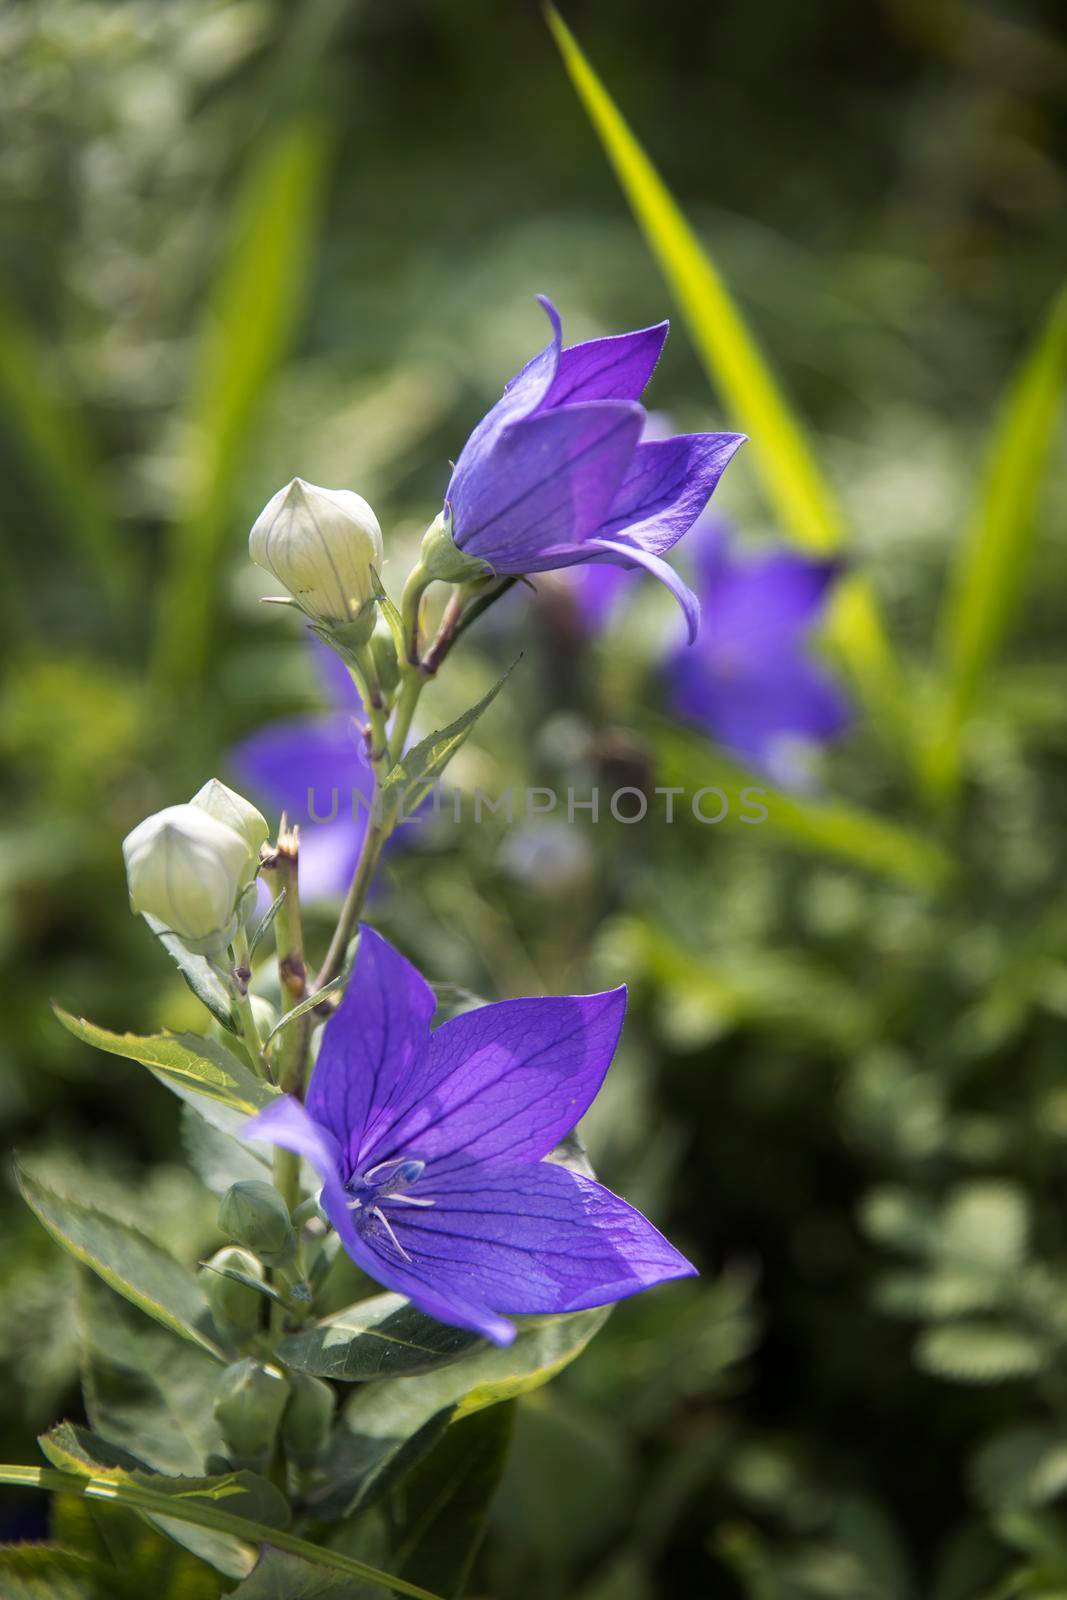 Flowers blue bell, bellflower, ?ampanula, close-up. Flowering blue platycodon in the garden.